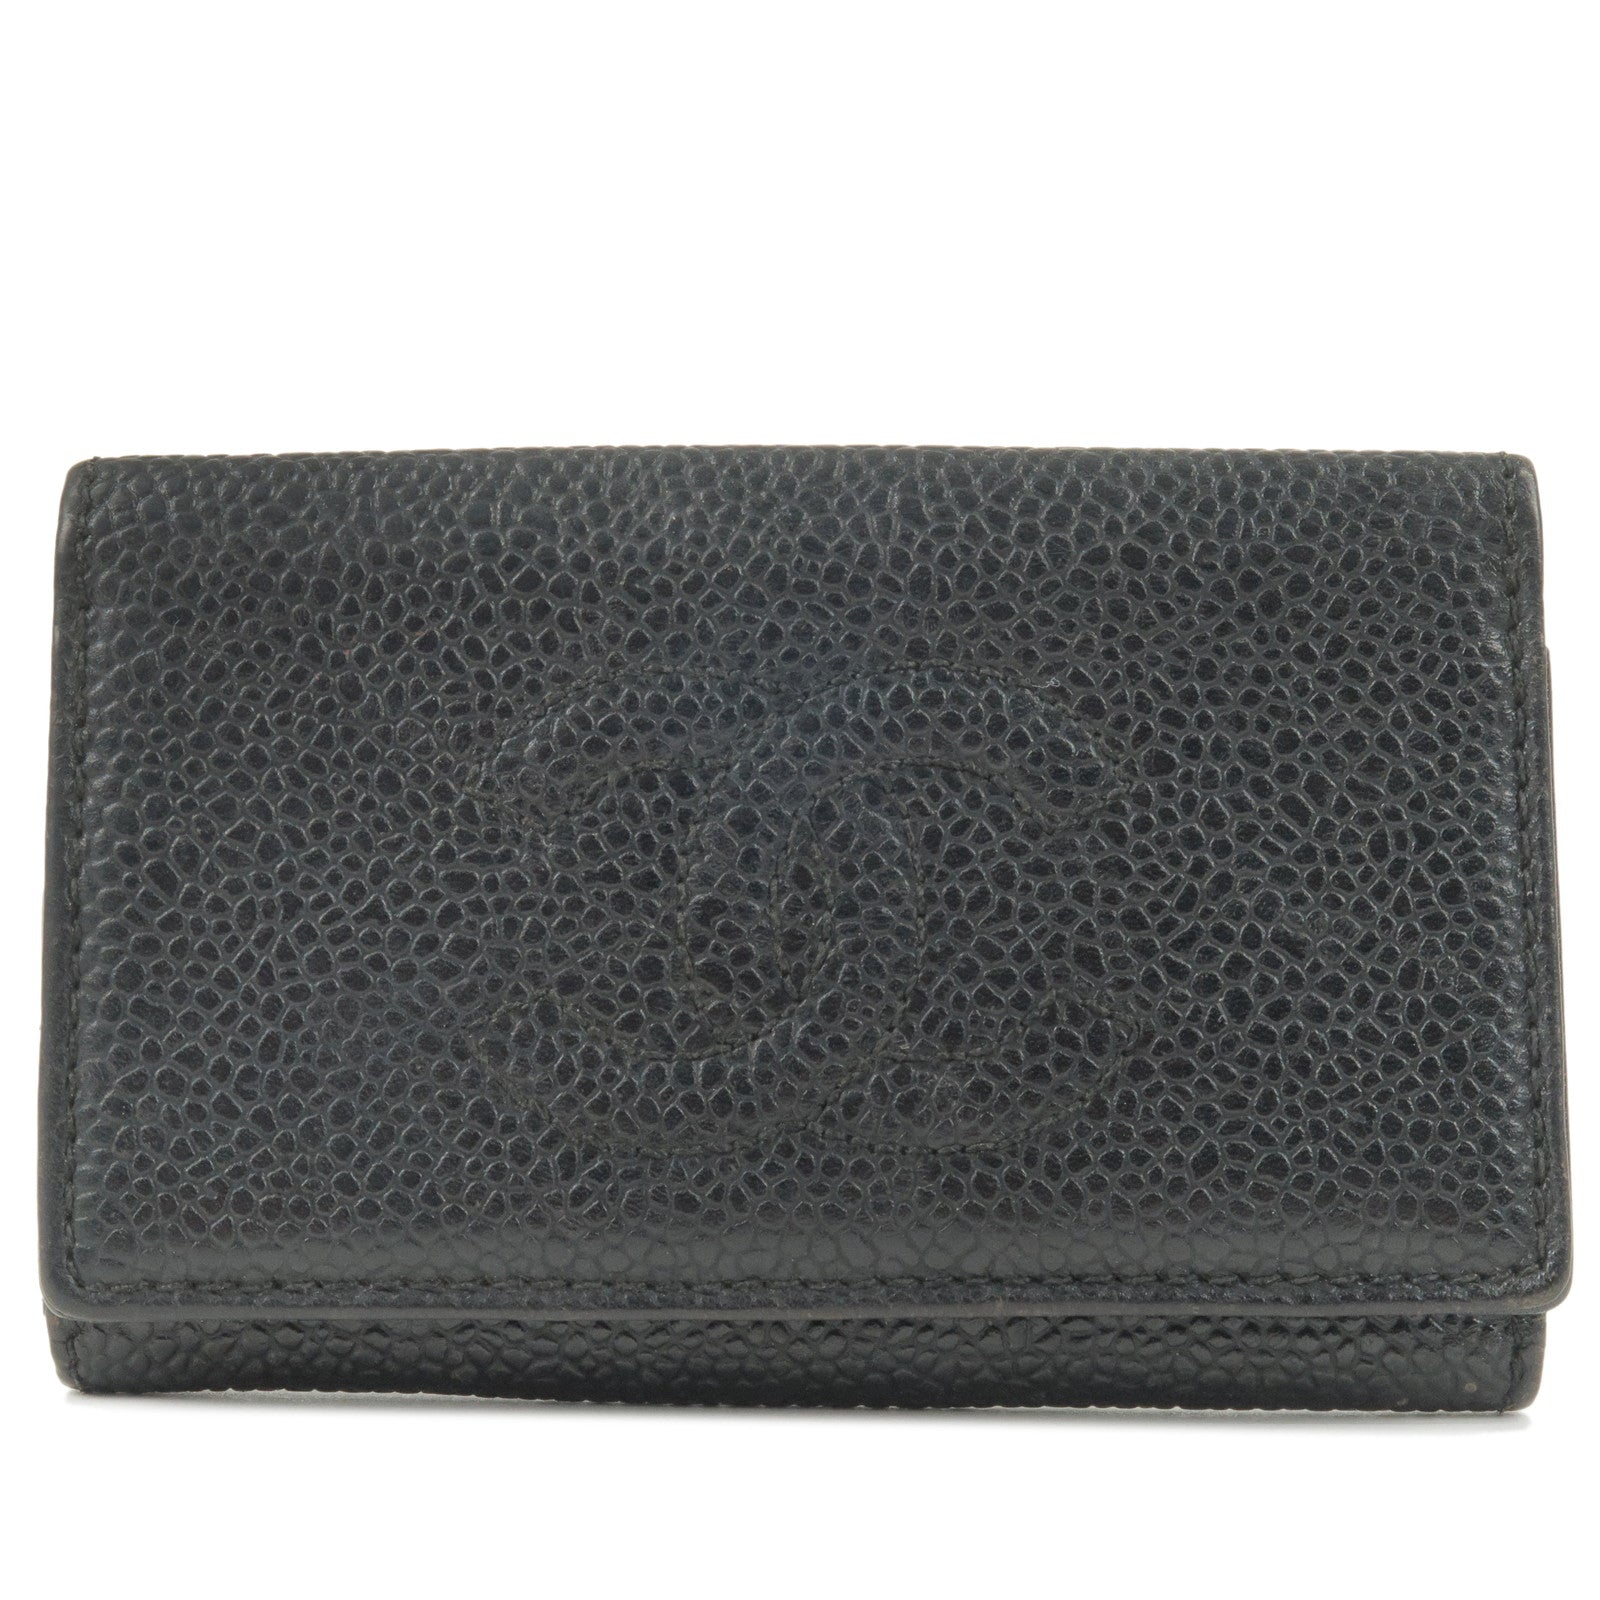 CHANEL Black Caviar Leather Six Key Holder Case Mini Wallet Pouch